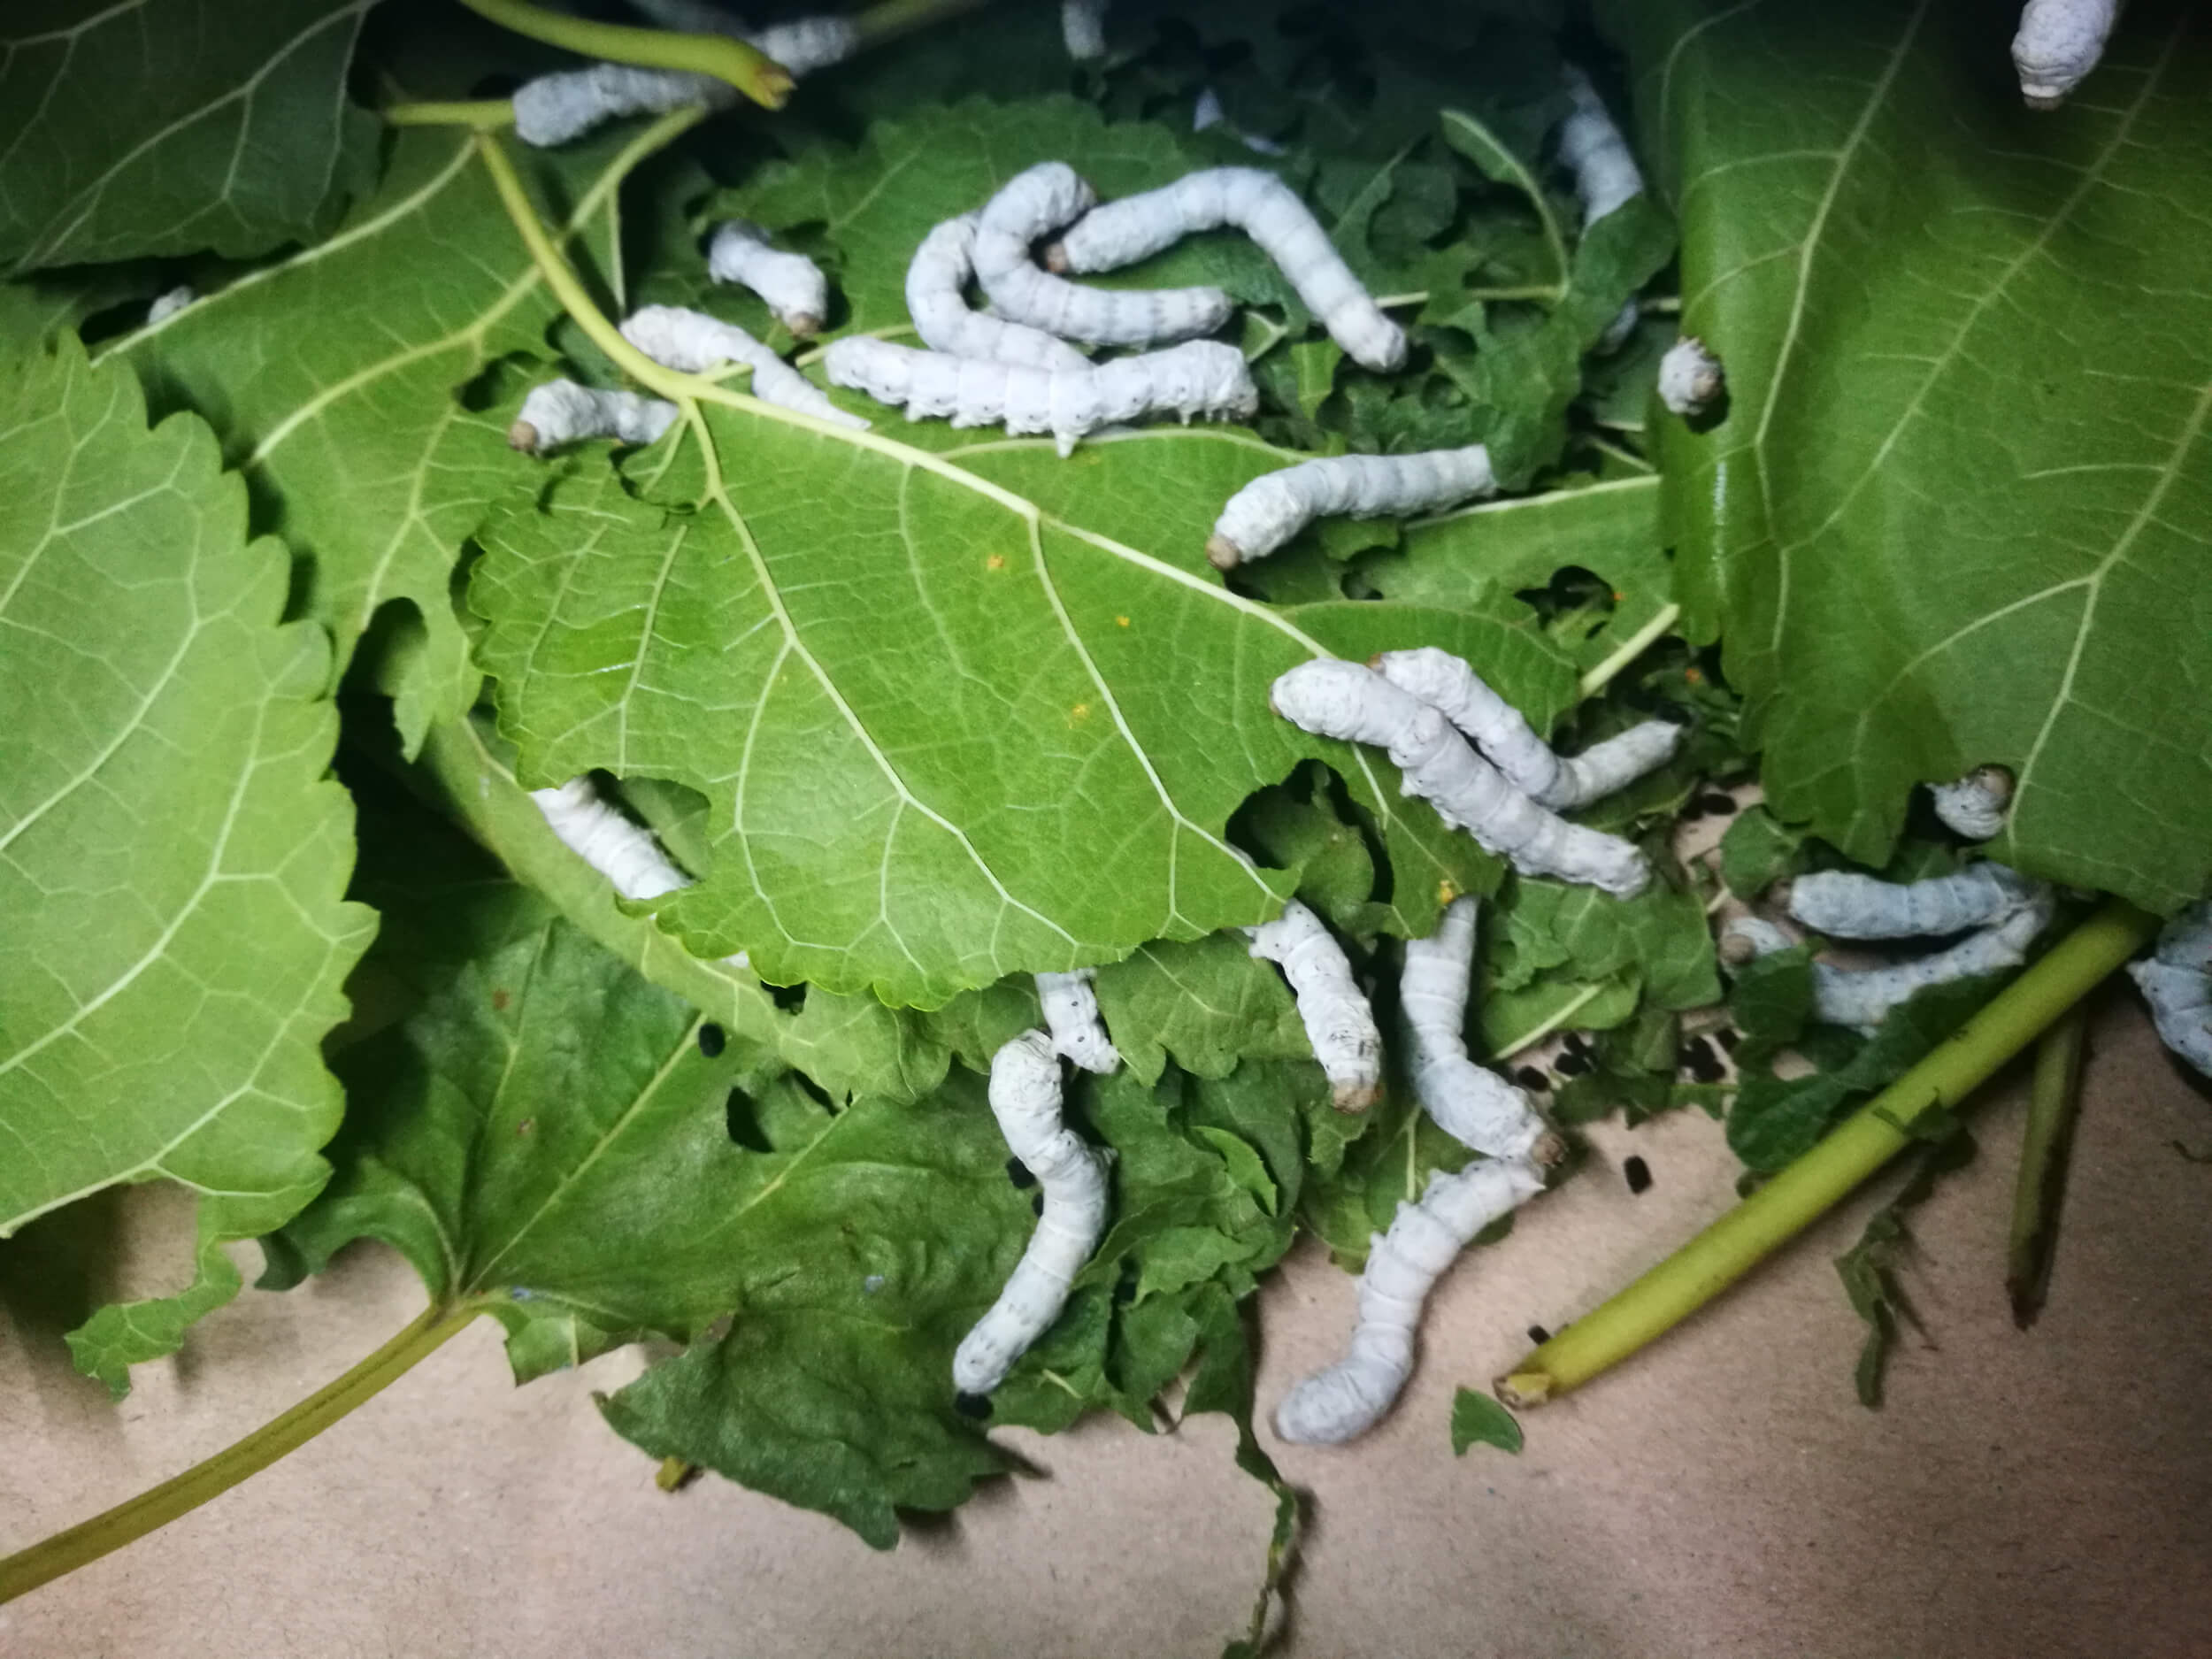 Silkworms Eating